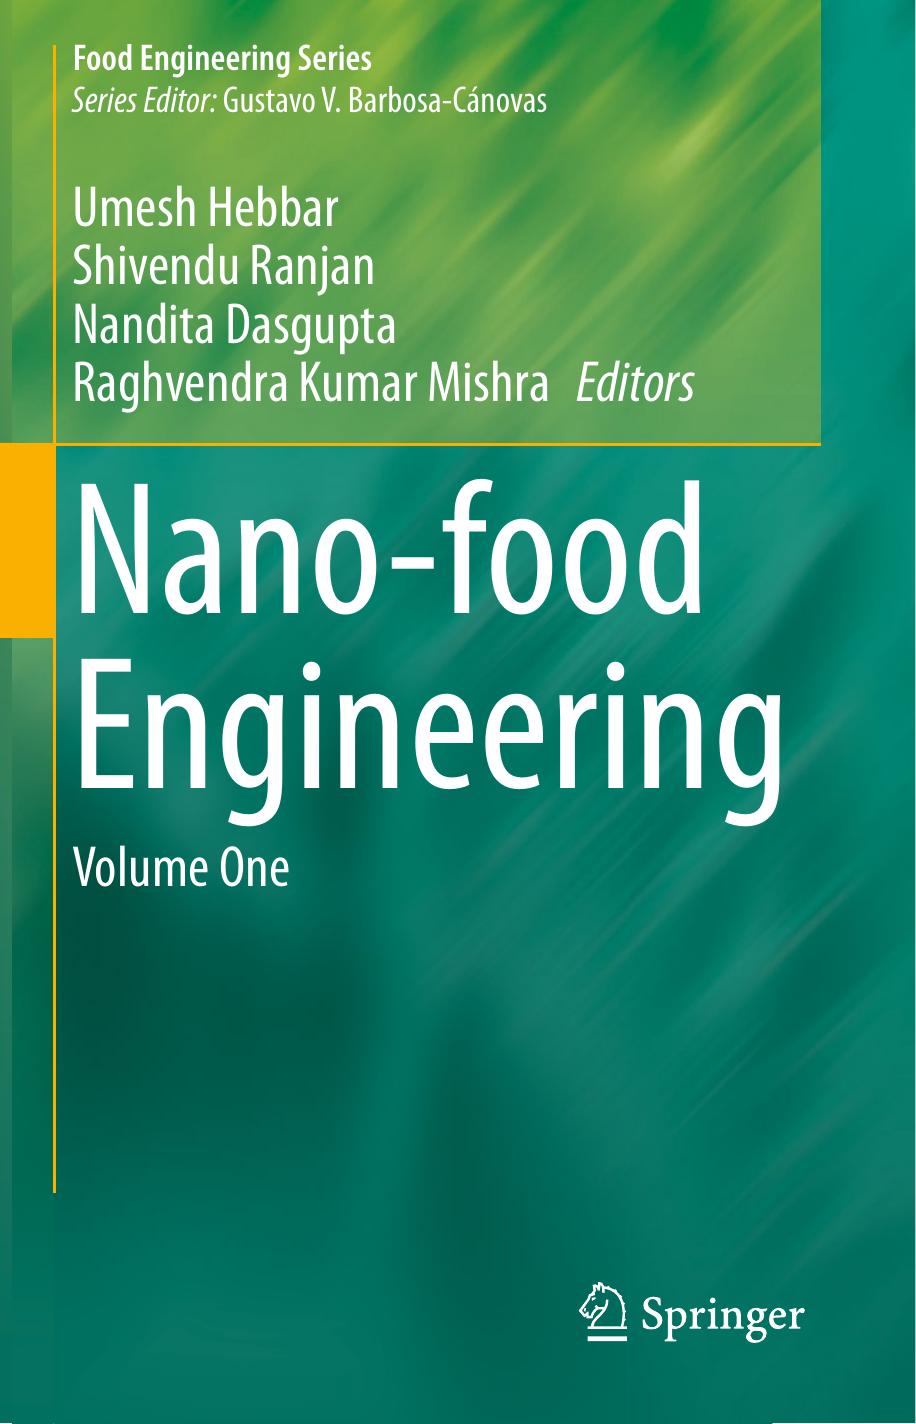 Nano-food Engineering  Volume One-Springer International Publishing Springer (2020) (1)